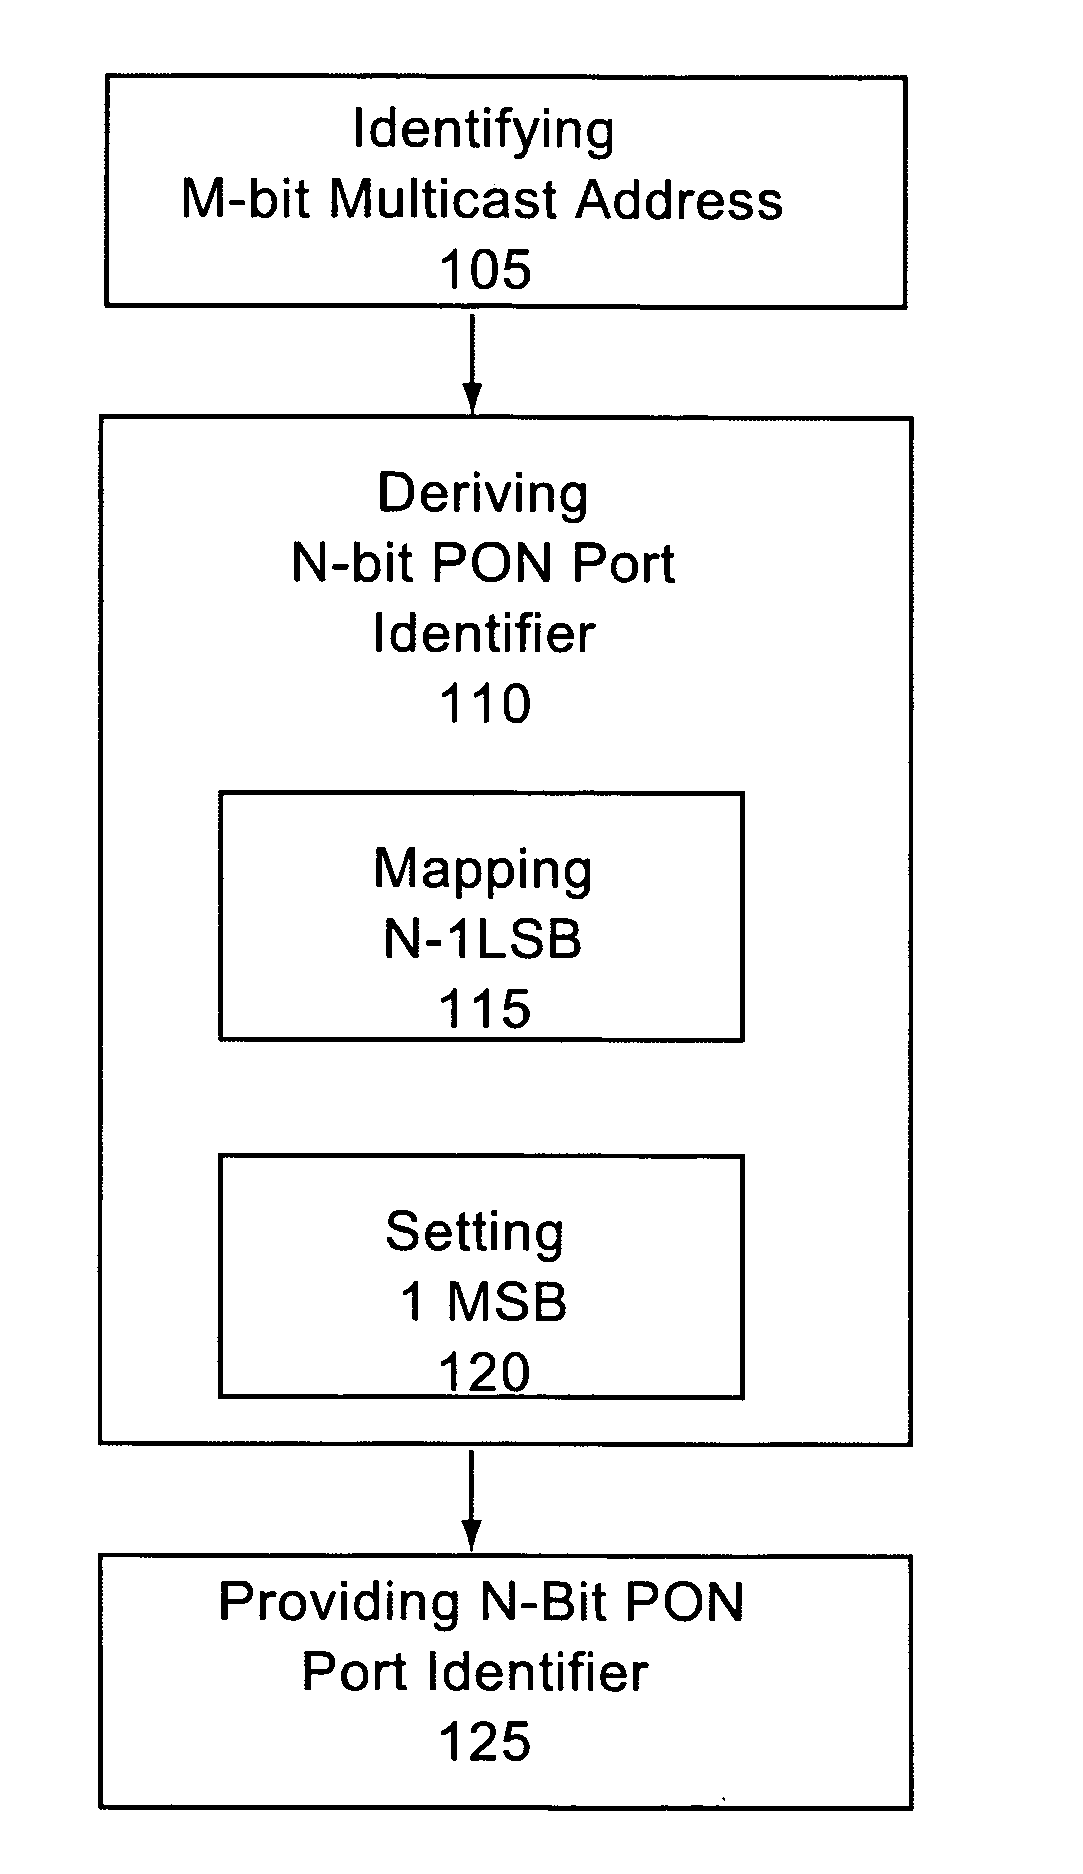 Deriving passive optical network port identifiers